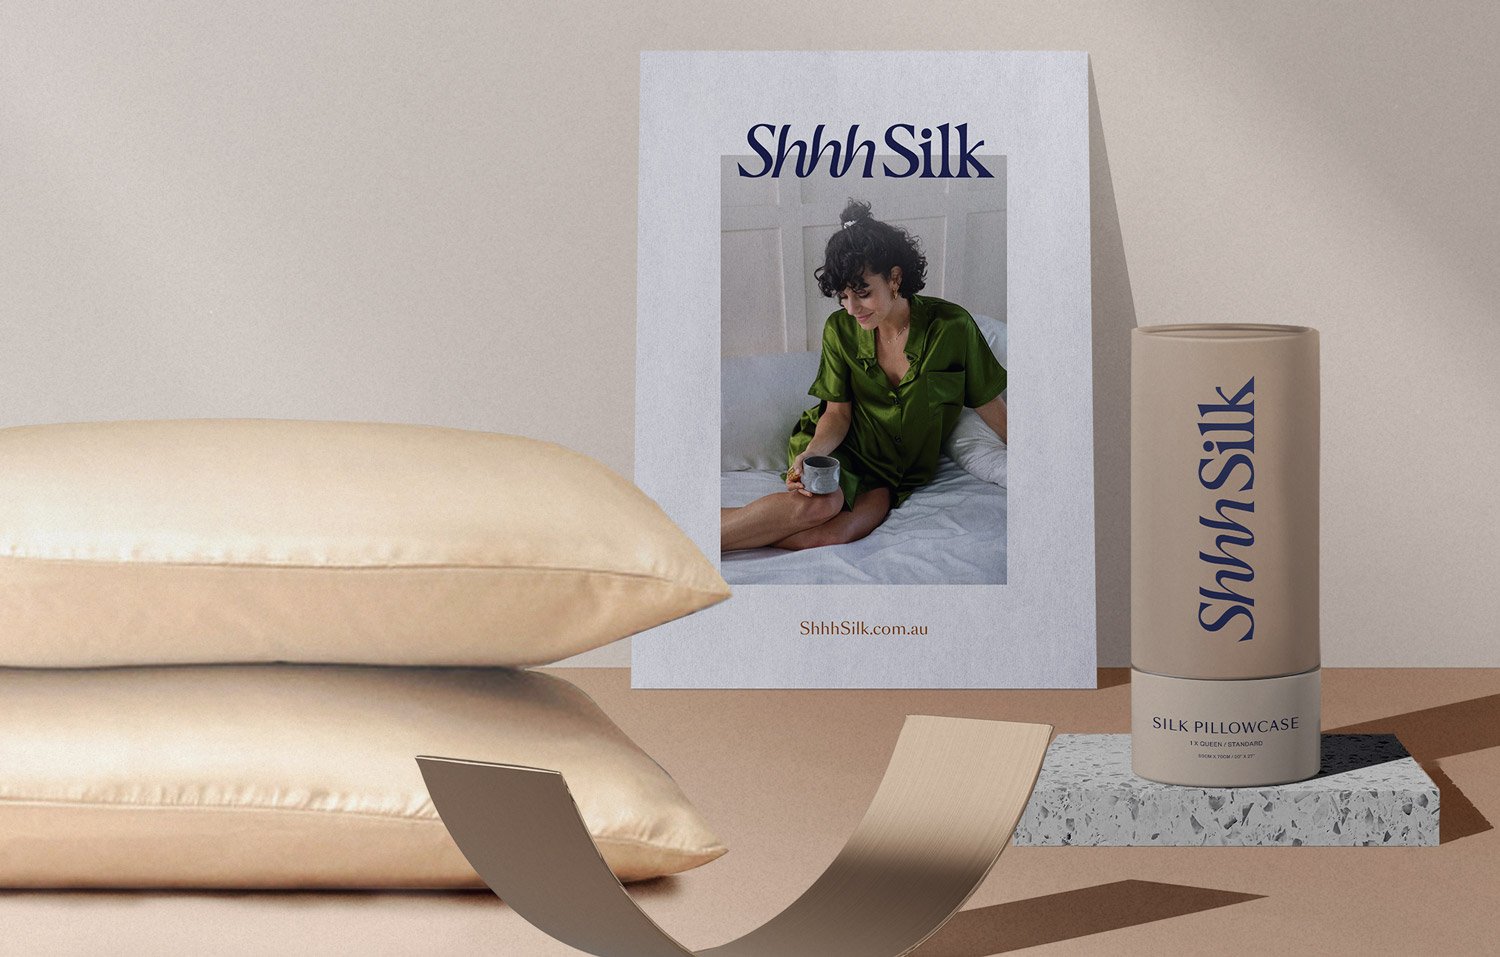 Shhh Silk Packaging design shown in still life setting, looking elegant